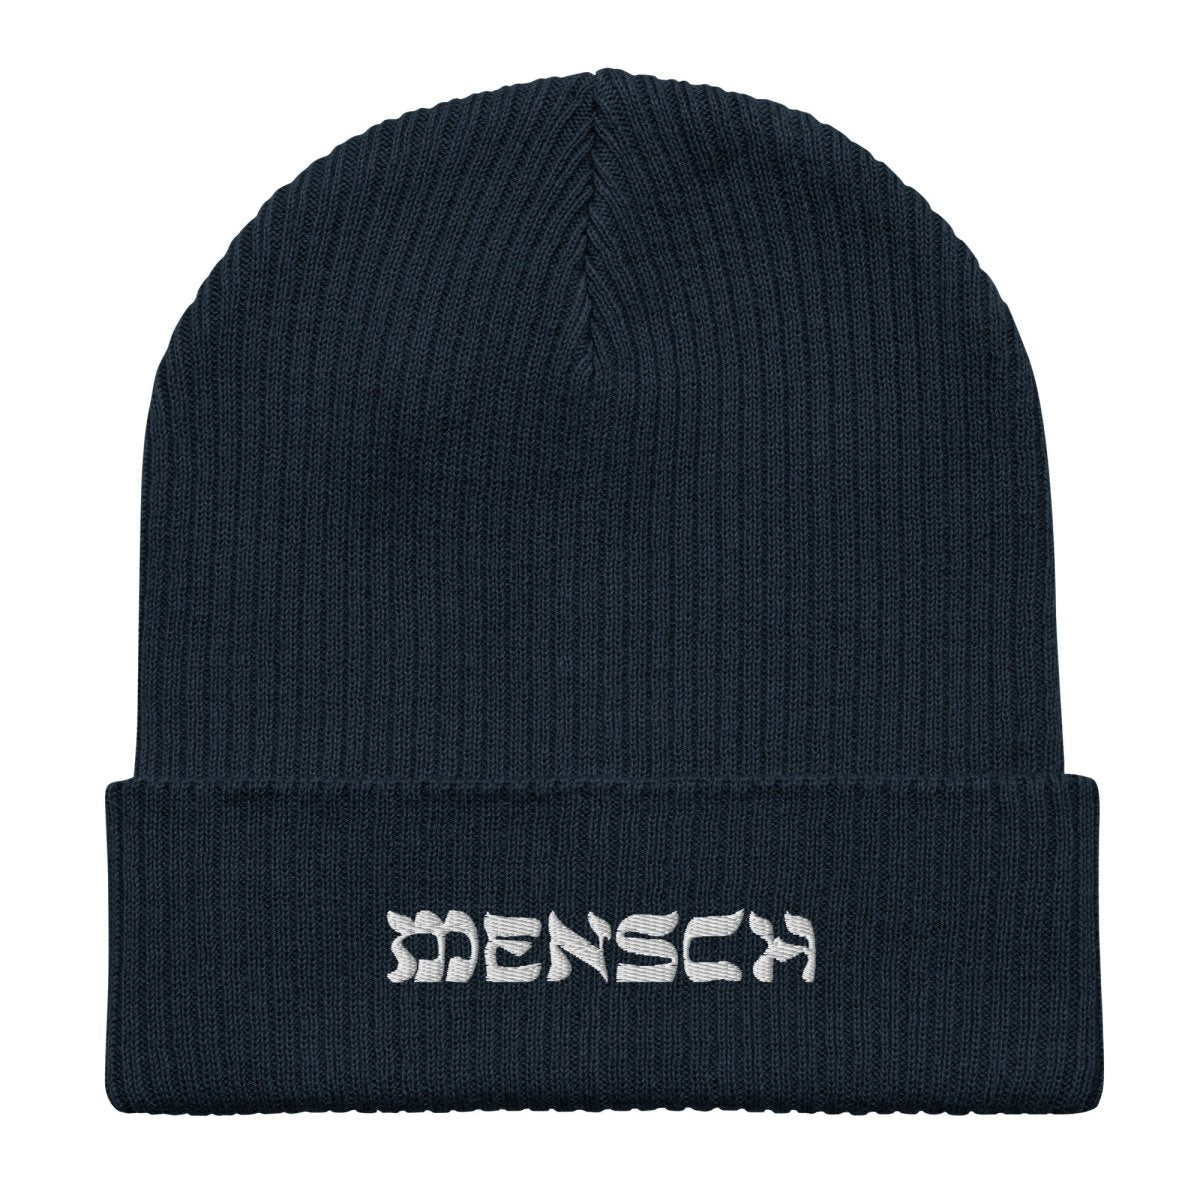 'Mensch' Beanie - Beanies / Caps / Hats - Meshugge